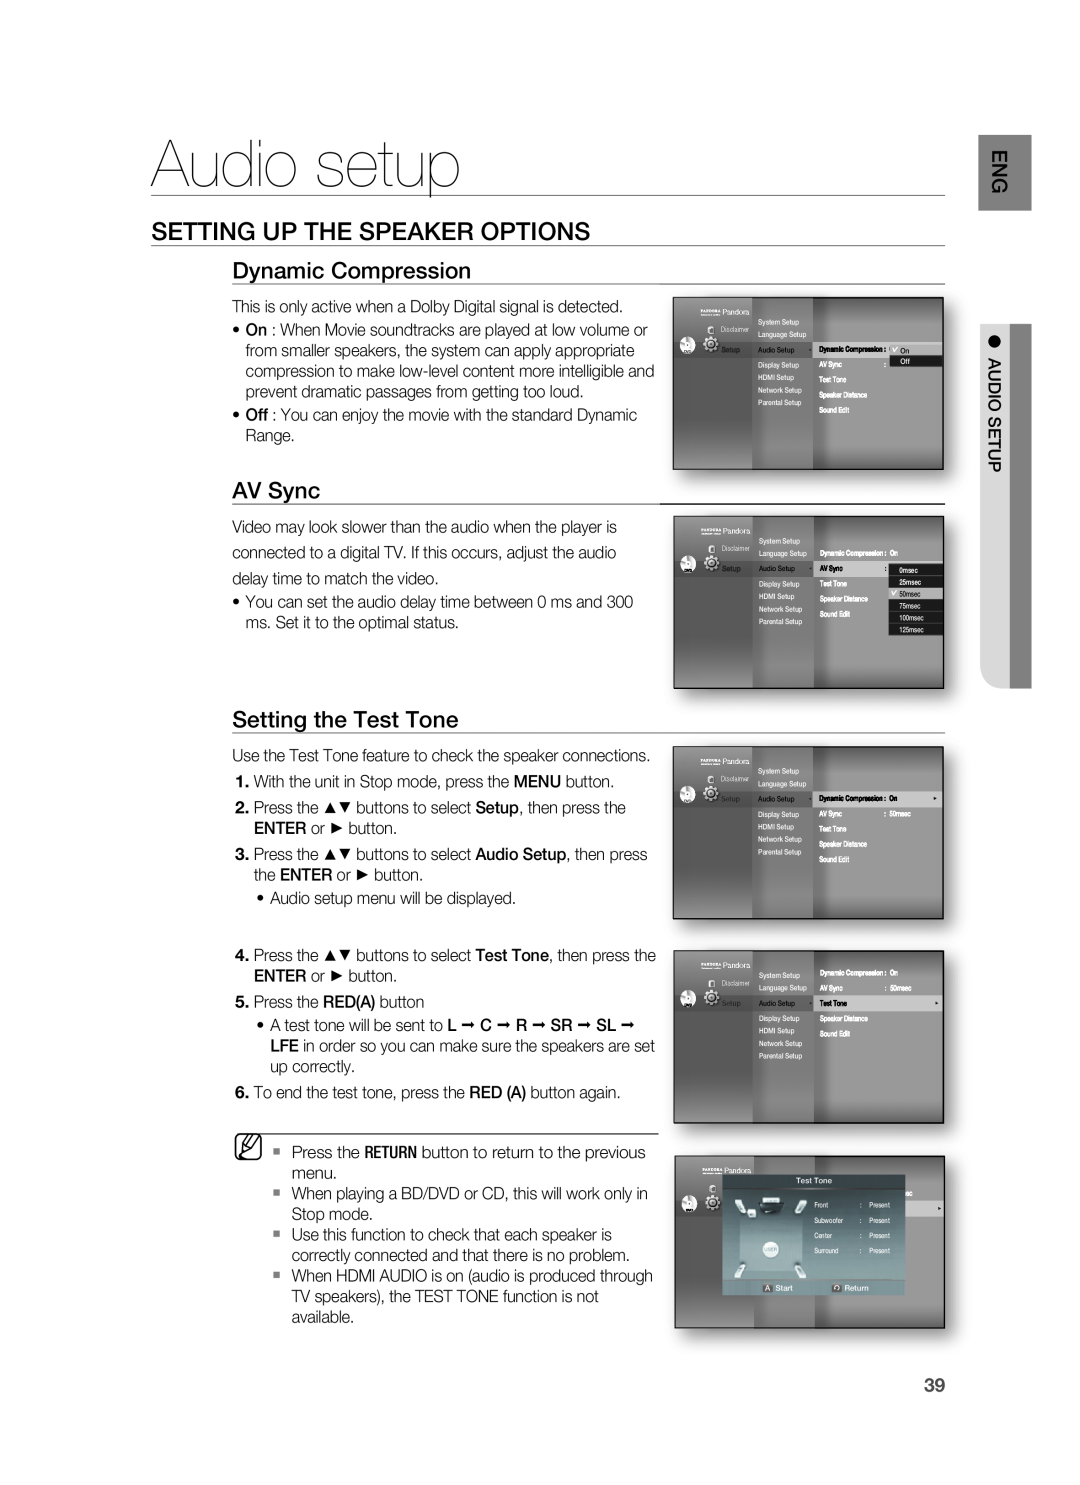 Samsung HT-BD1200 Audio setup, Setting Up The Speaker Options, Dynamic Compression, AV Sync, Setting the Test Tone, Range 